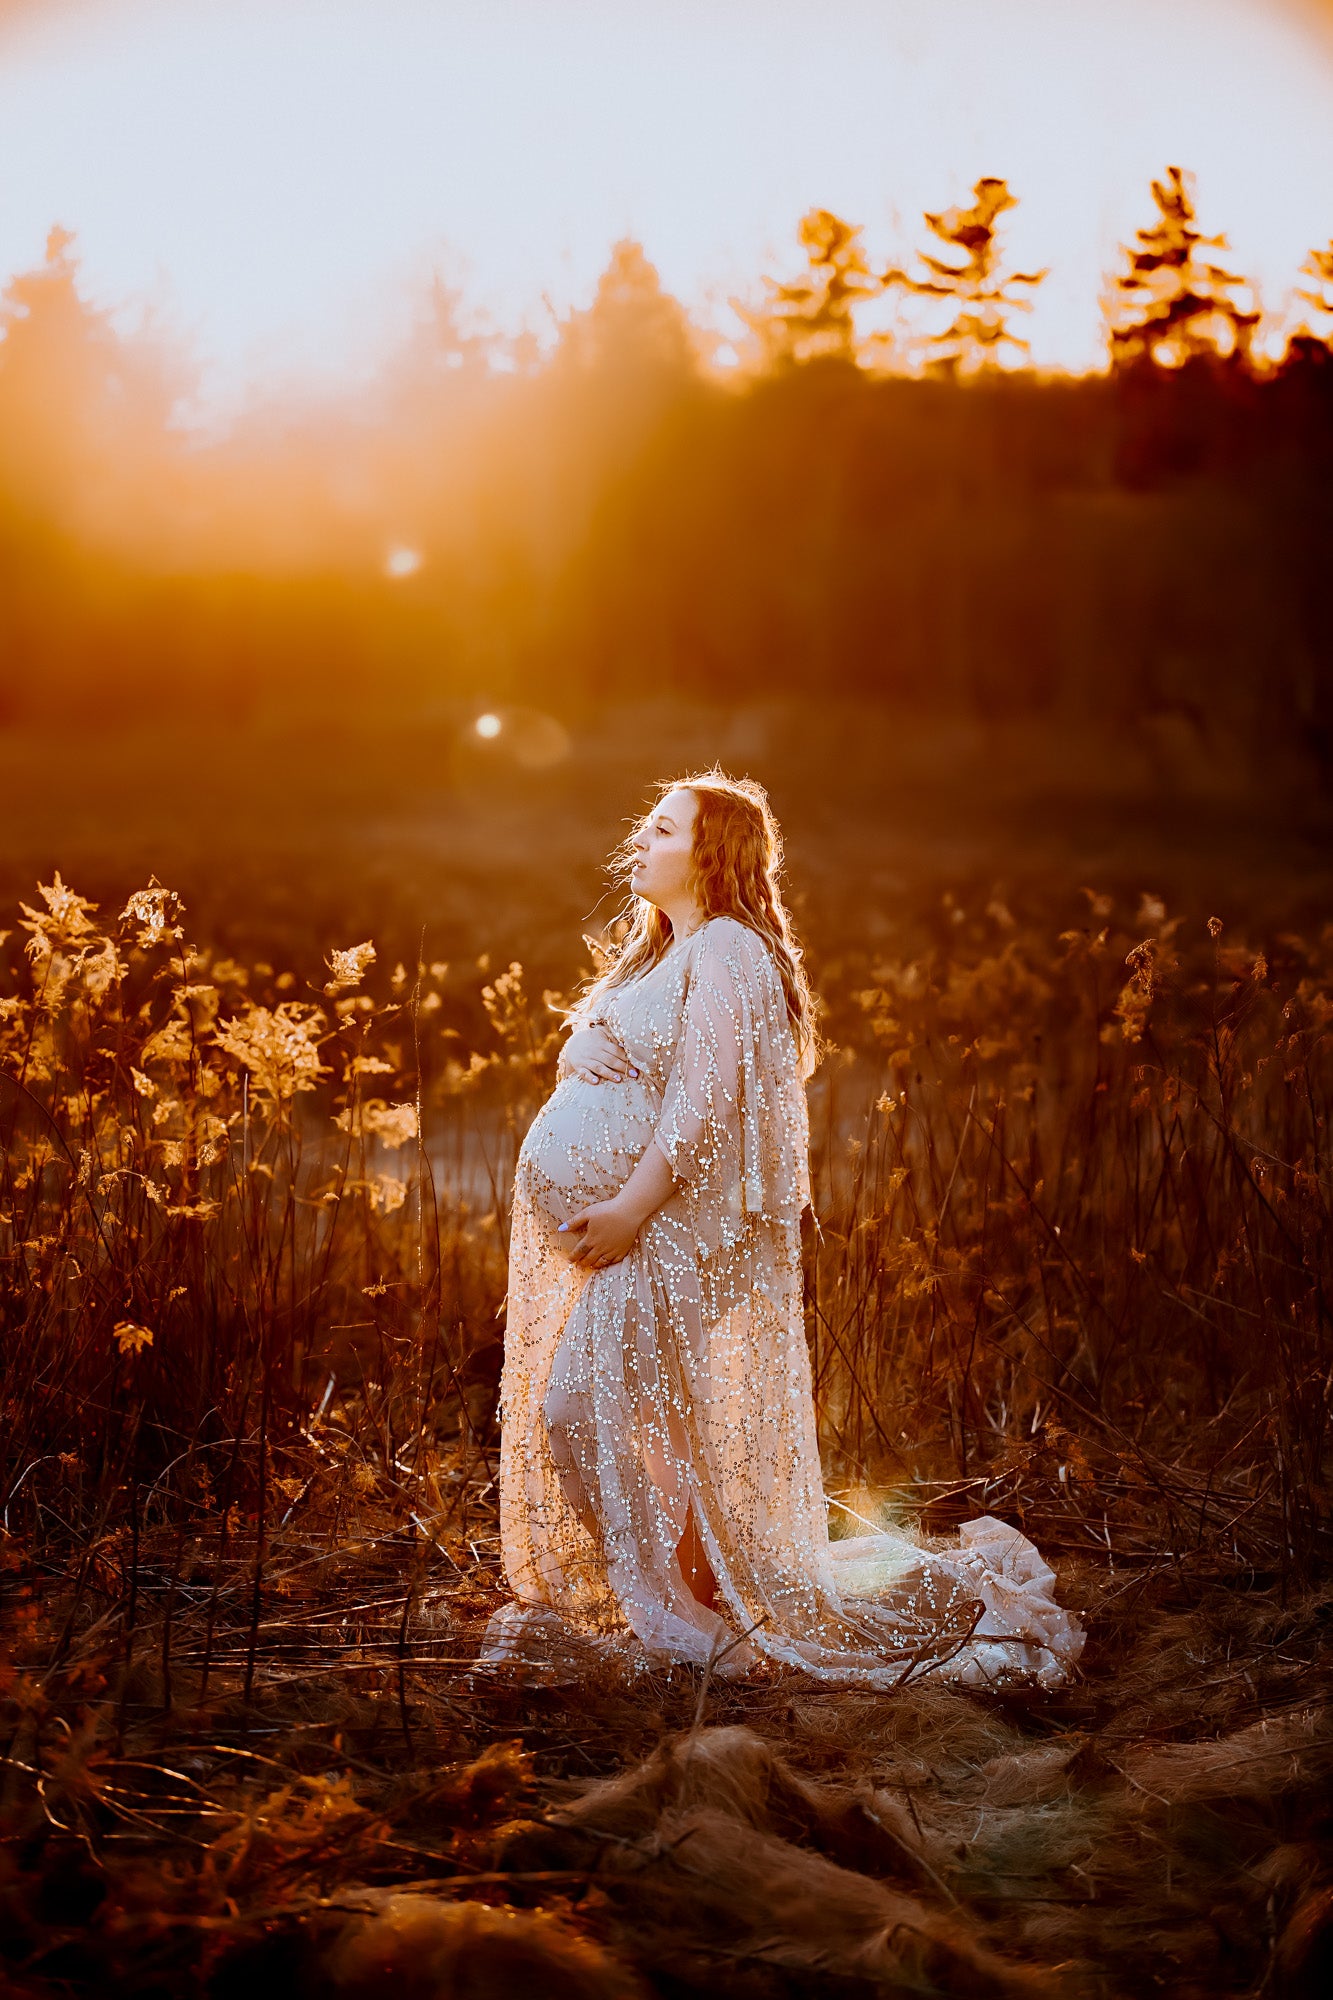 Boho Gold Sequin Maternity Dress - maternity photoshoot dress